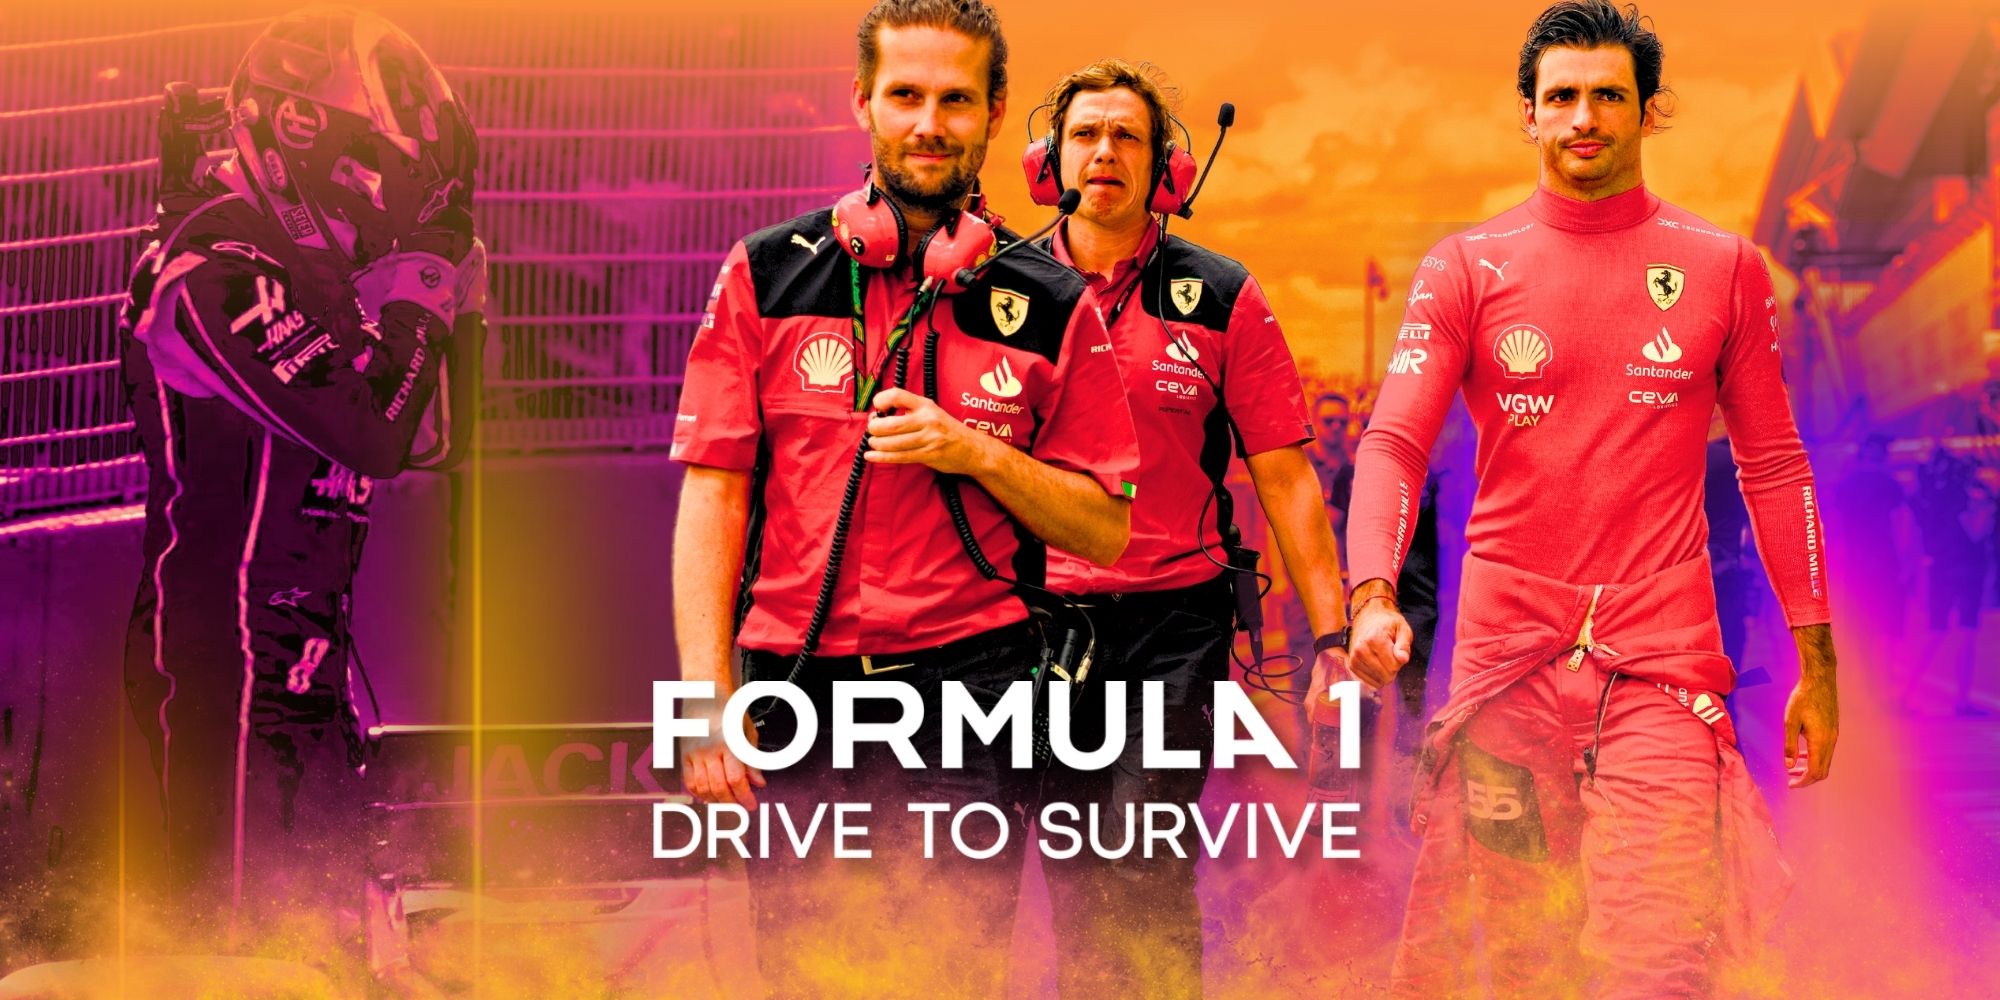 Drive To Survive Season 6 promo image